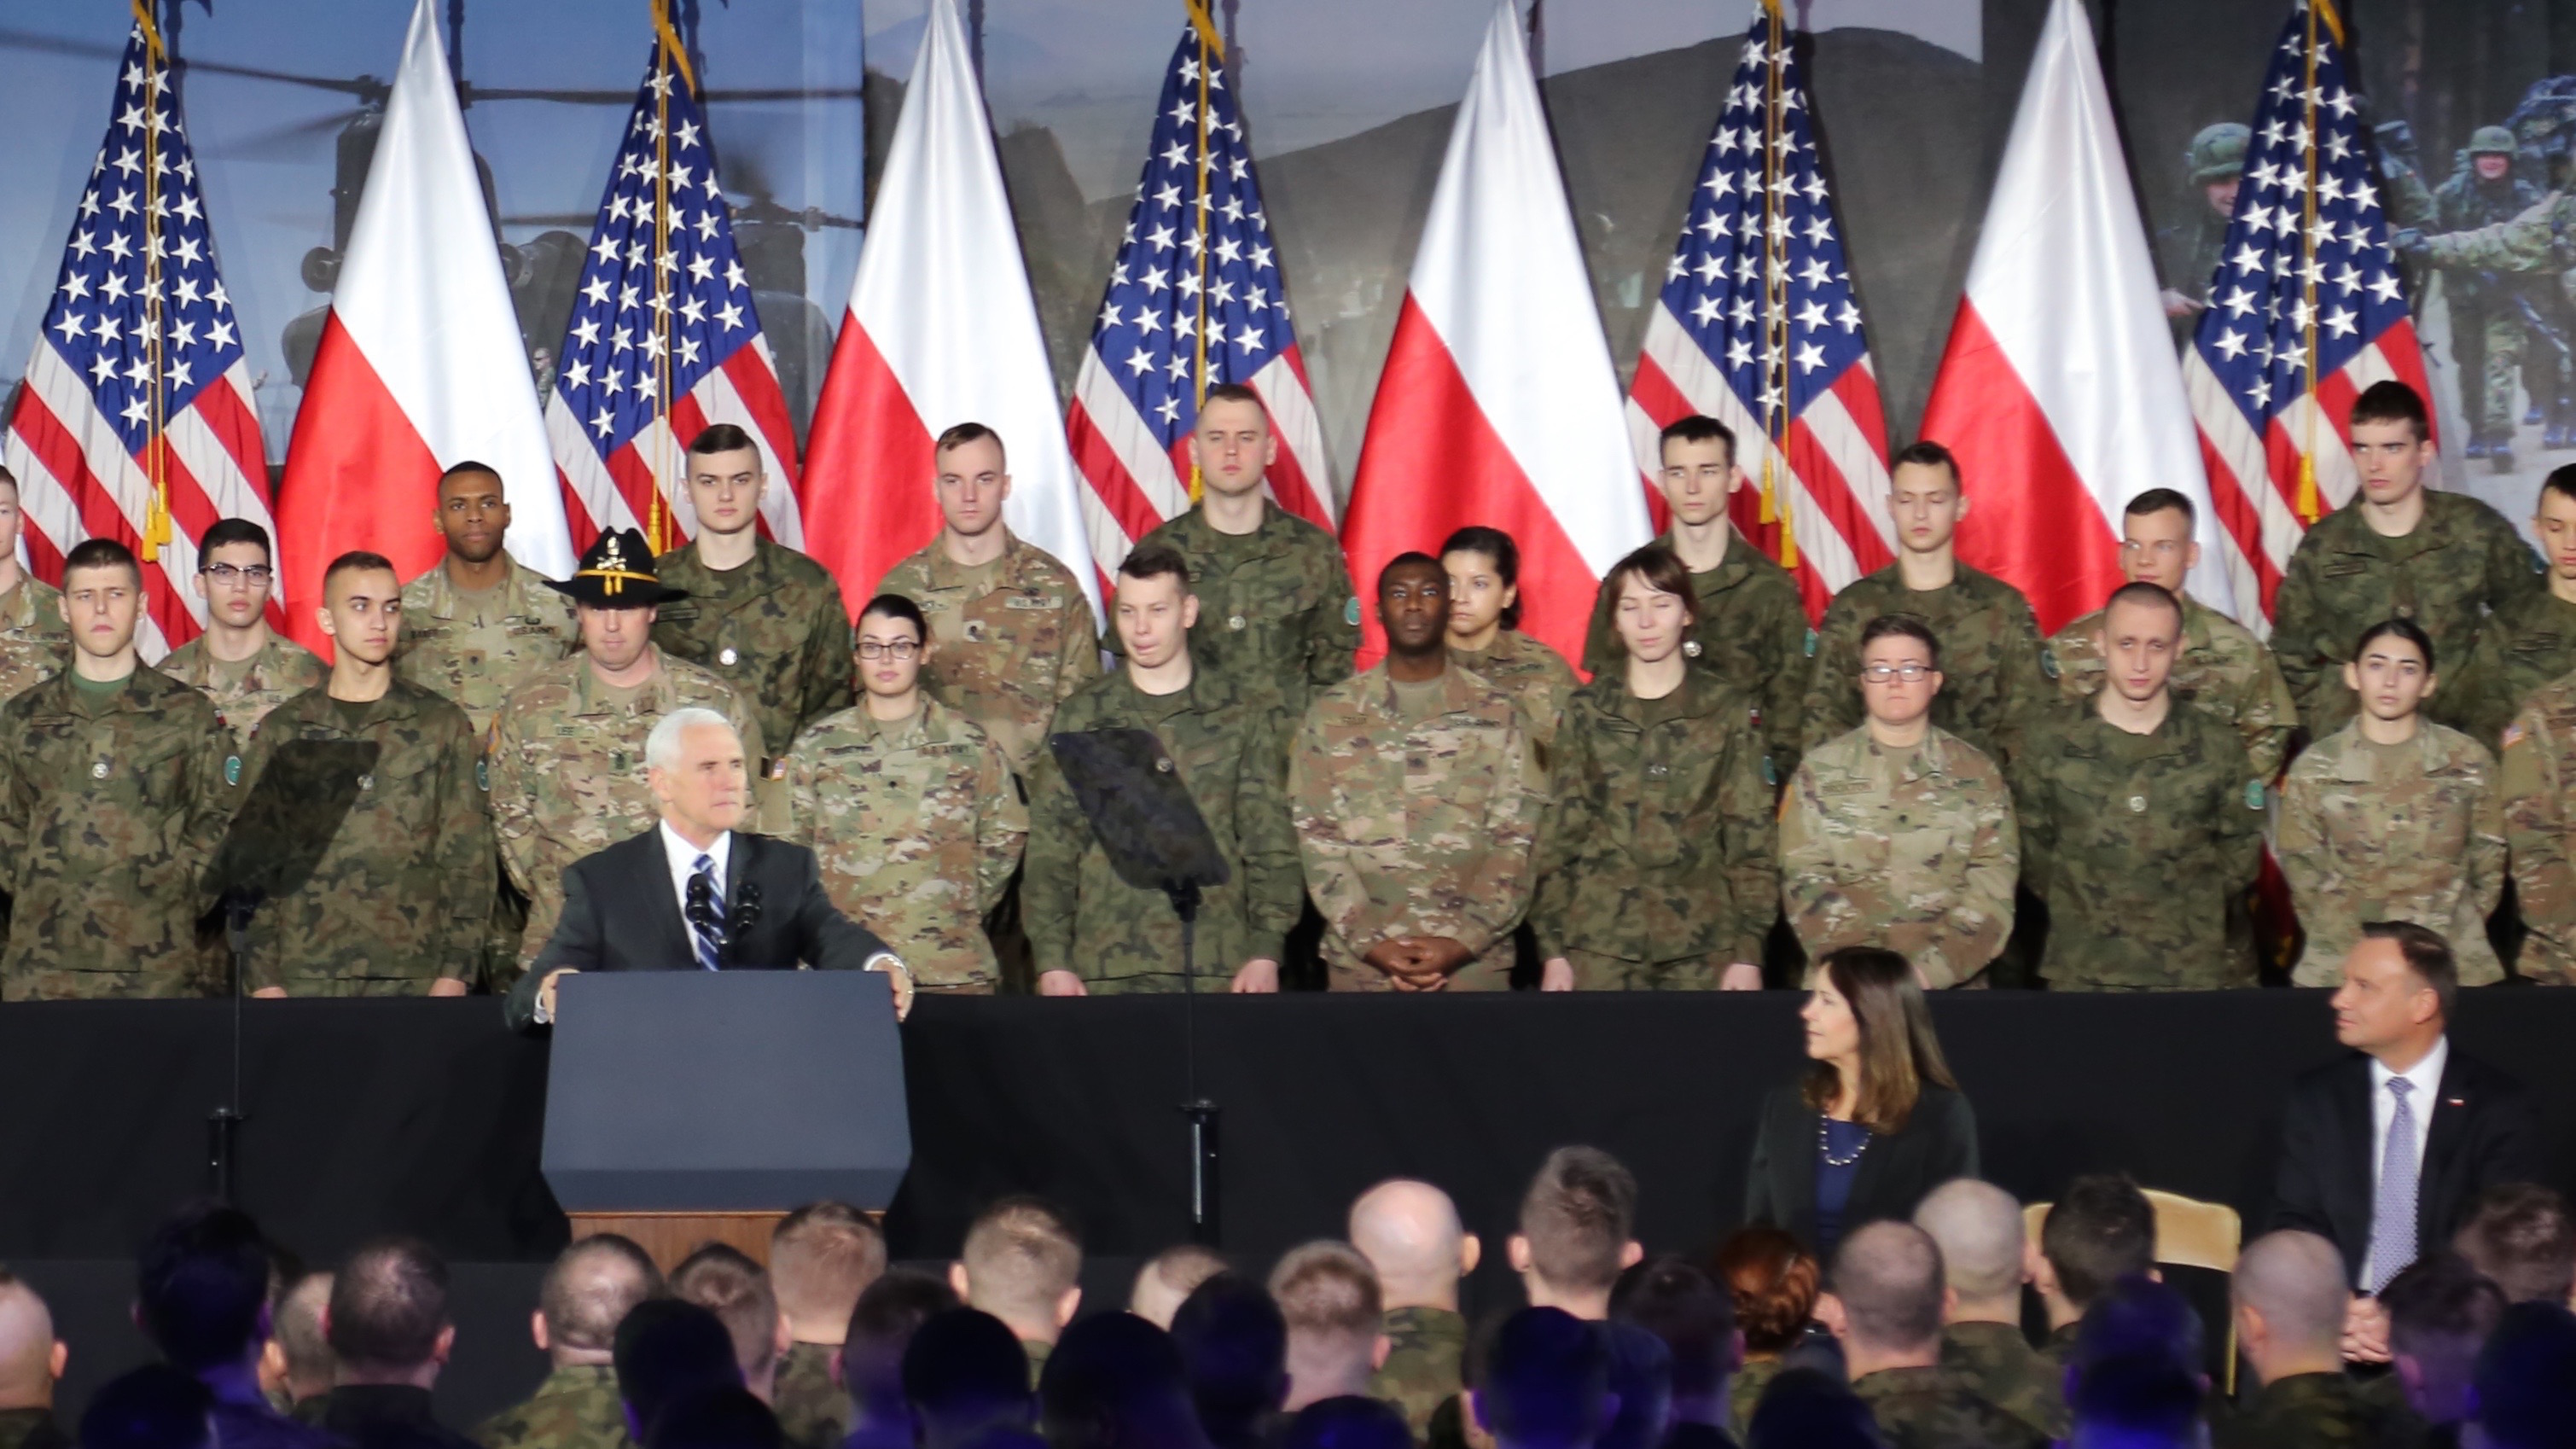 Przemawia wiceprezydent USA Mike Pence. Fot. Rafał Lesiecki / Defence24.pl